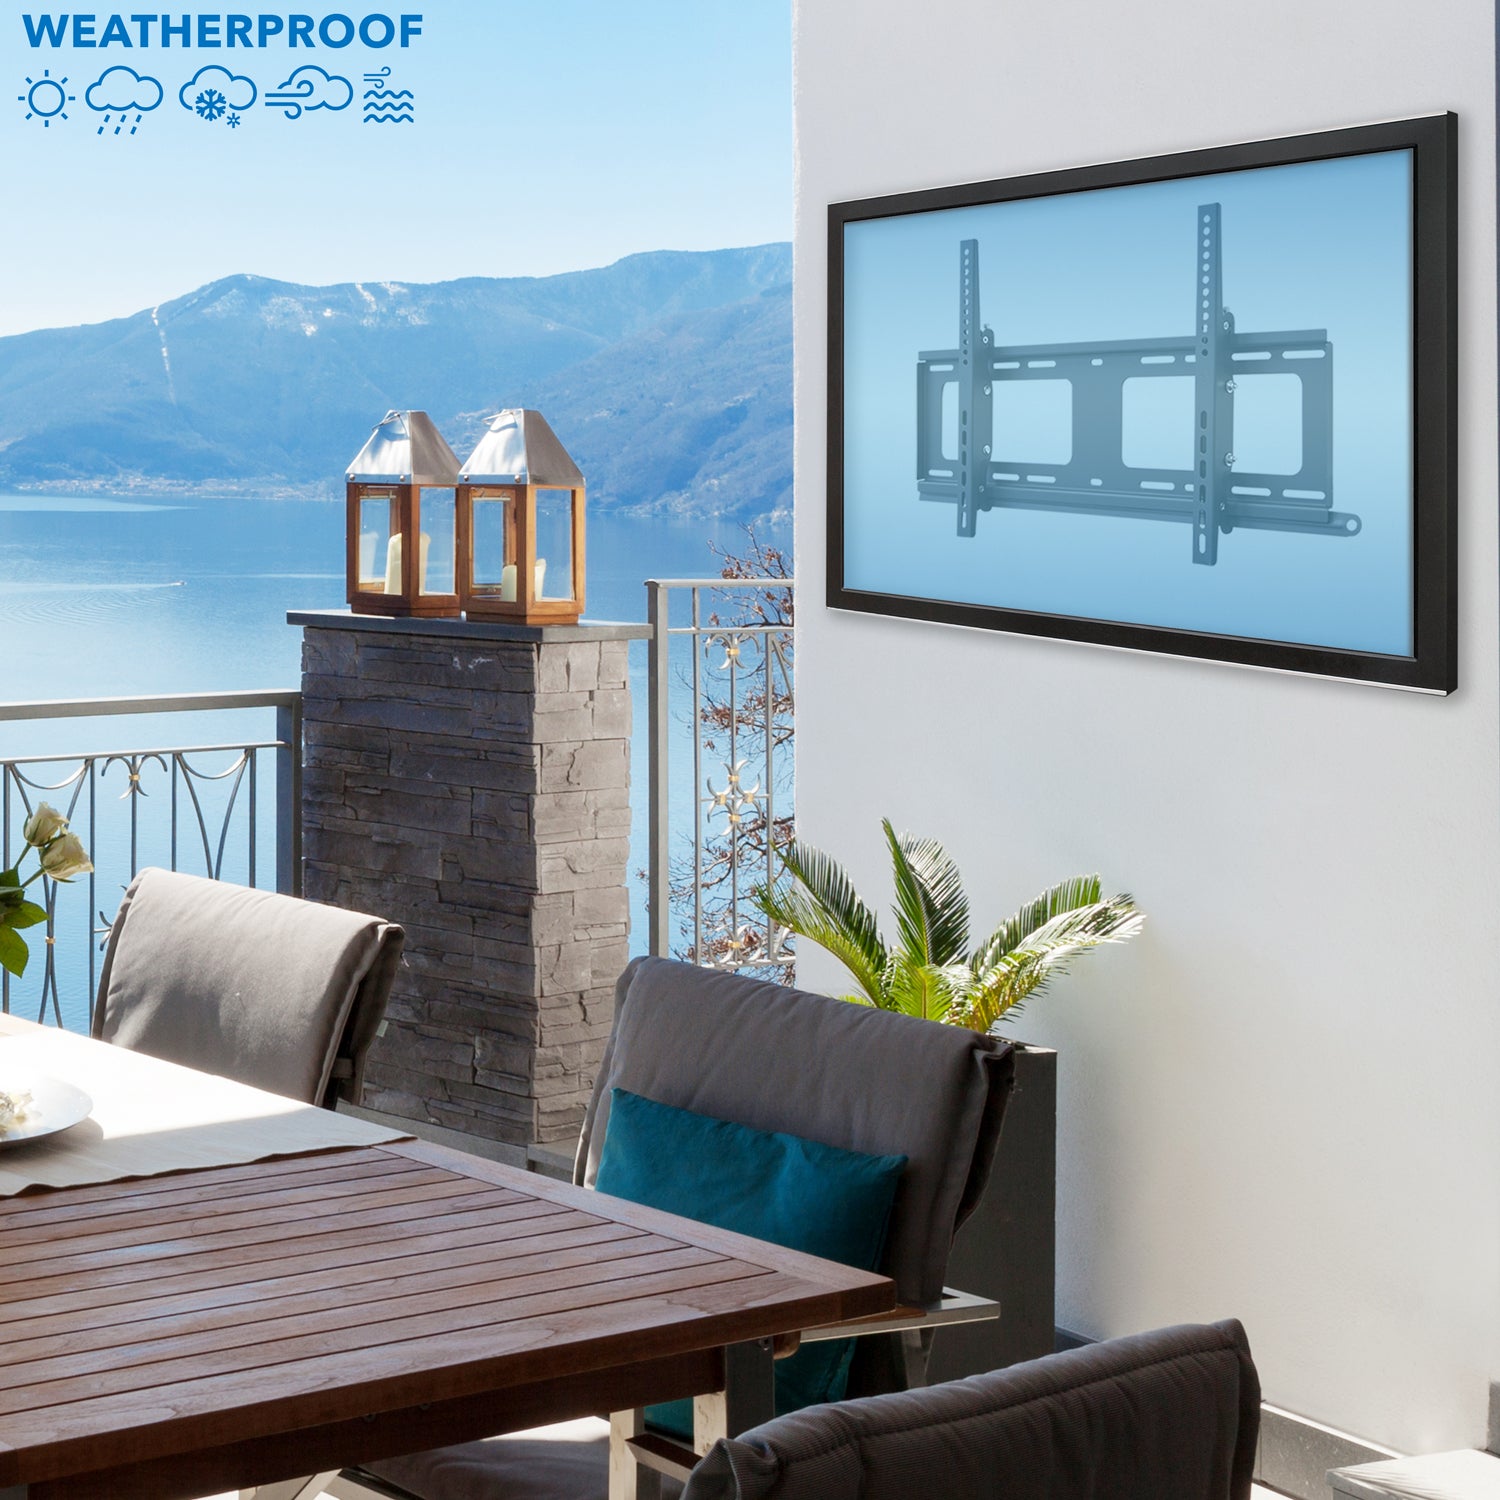 Weatherproof Outdoor Fixed Wall Mount - ADA Compliant